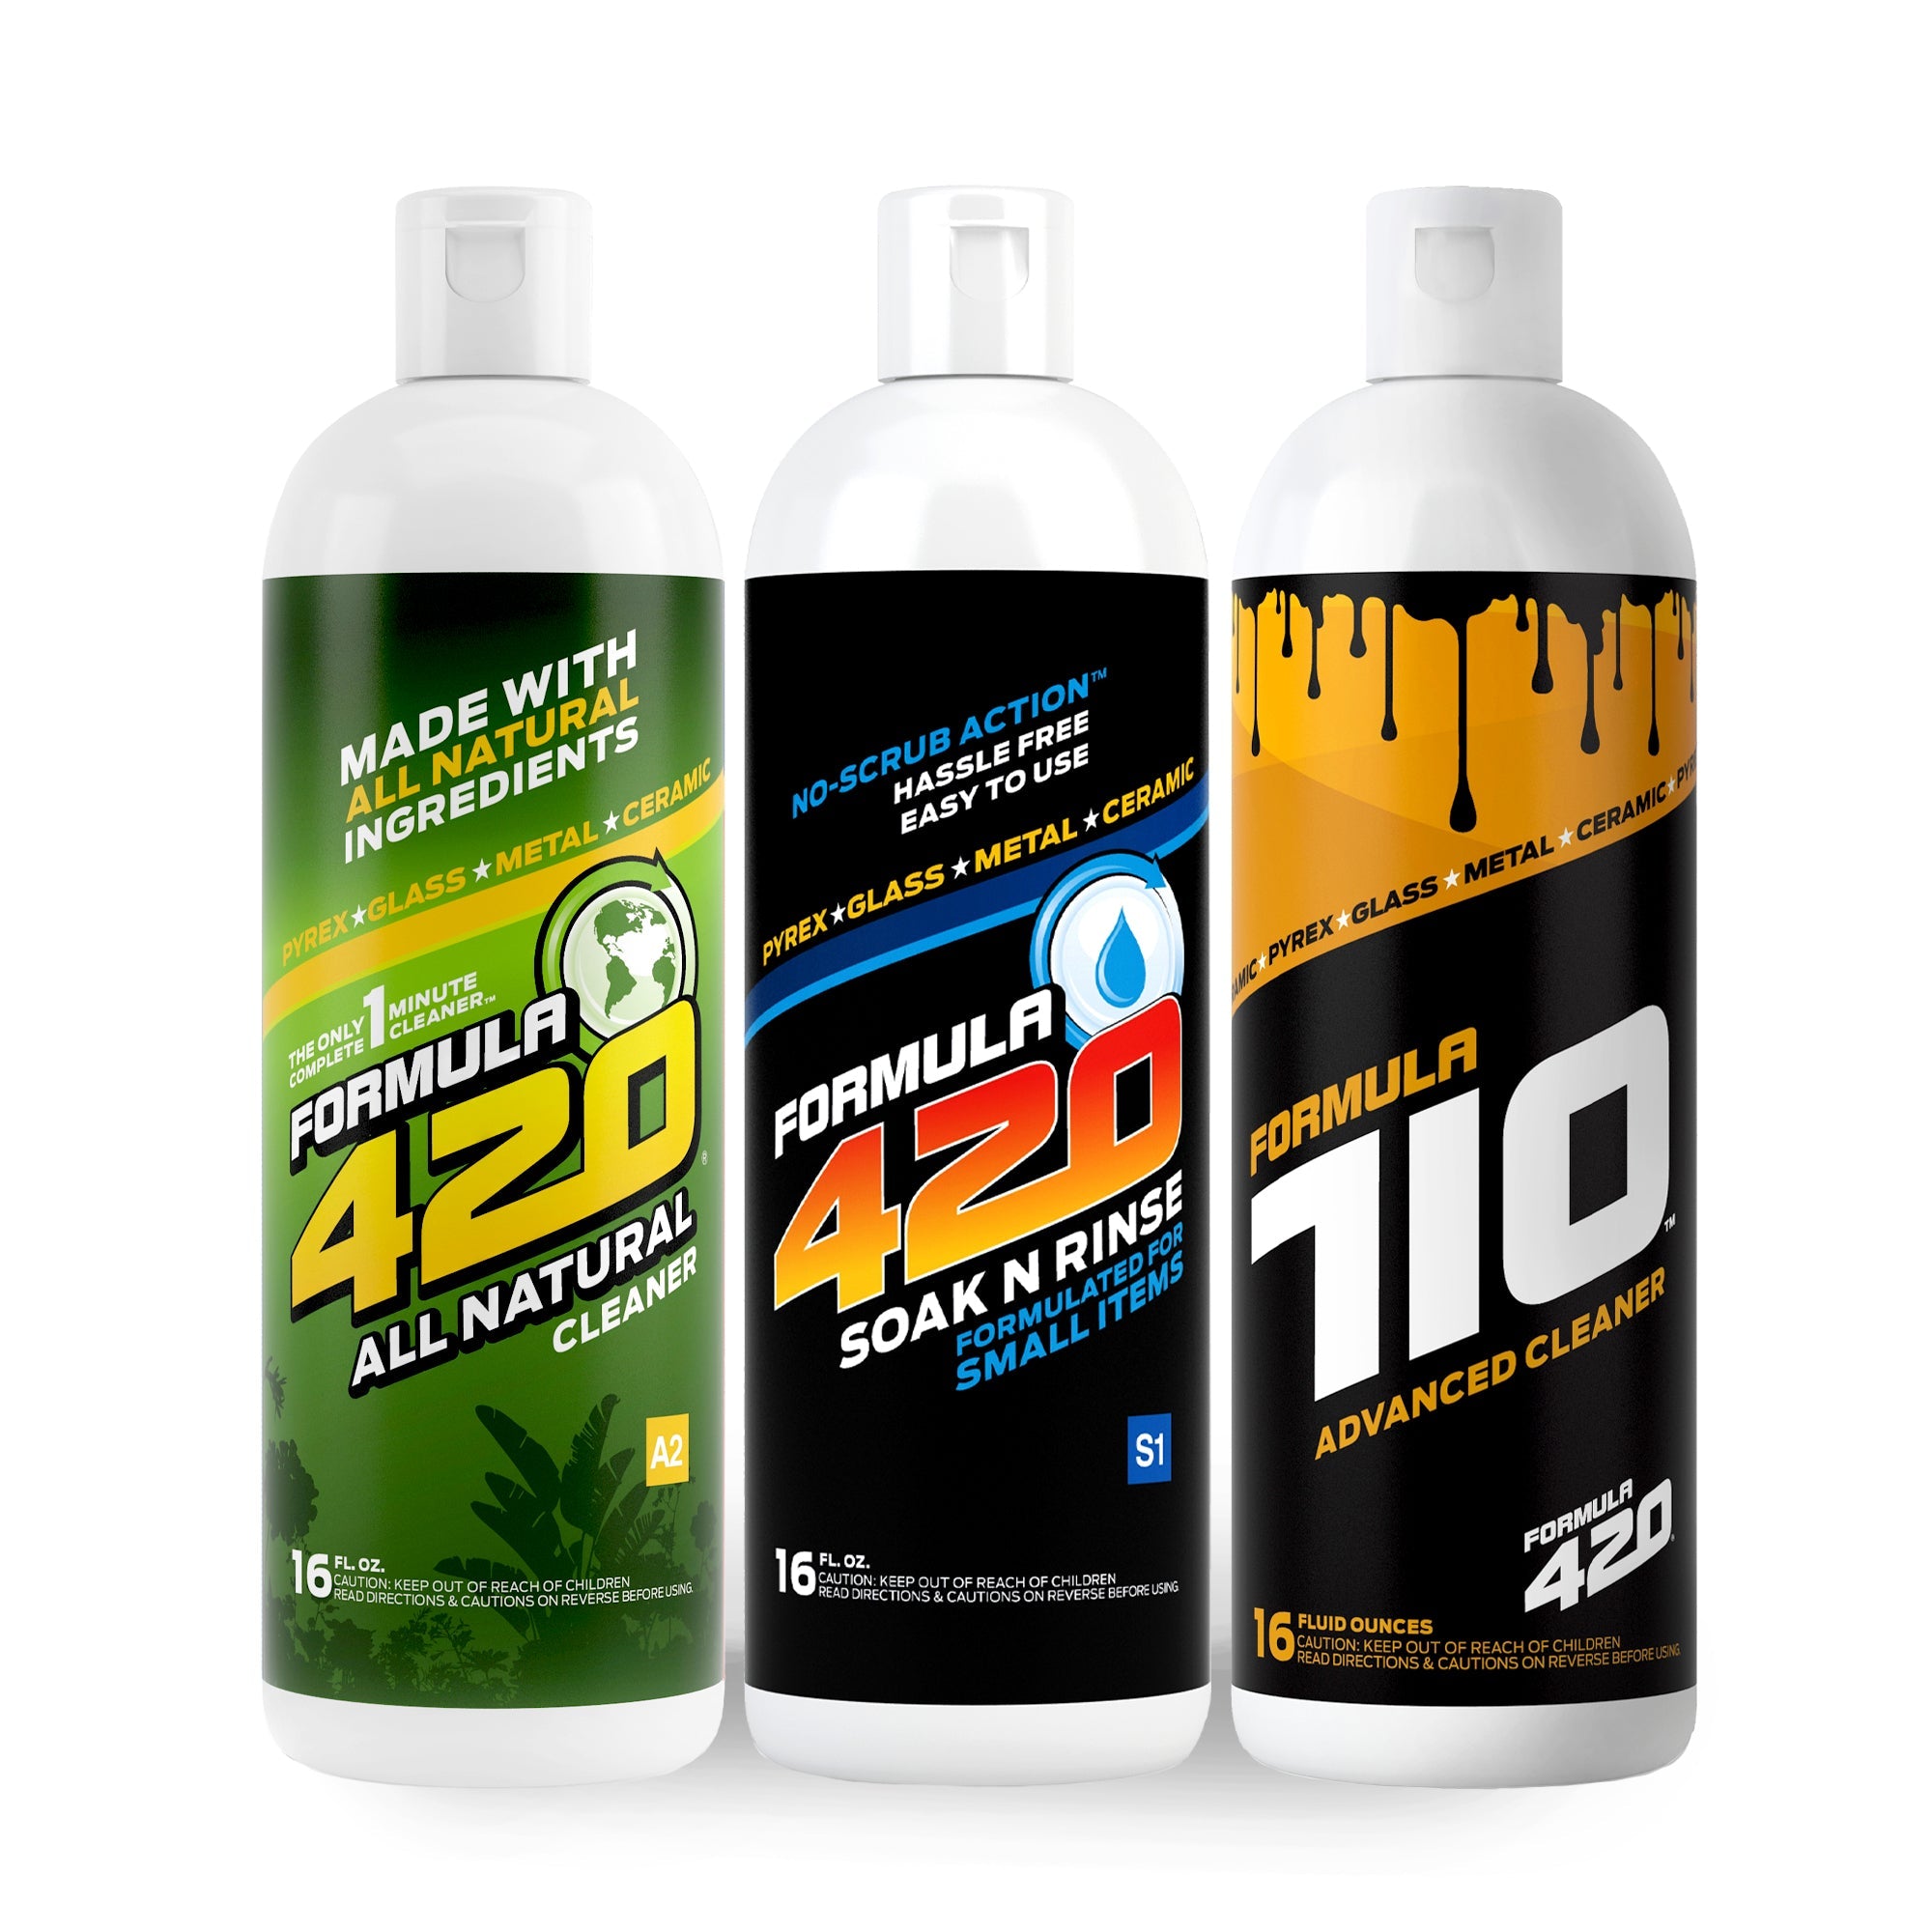 A1 - Formula 420 Original Cleaner - 12 Pack